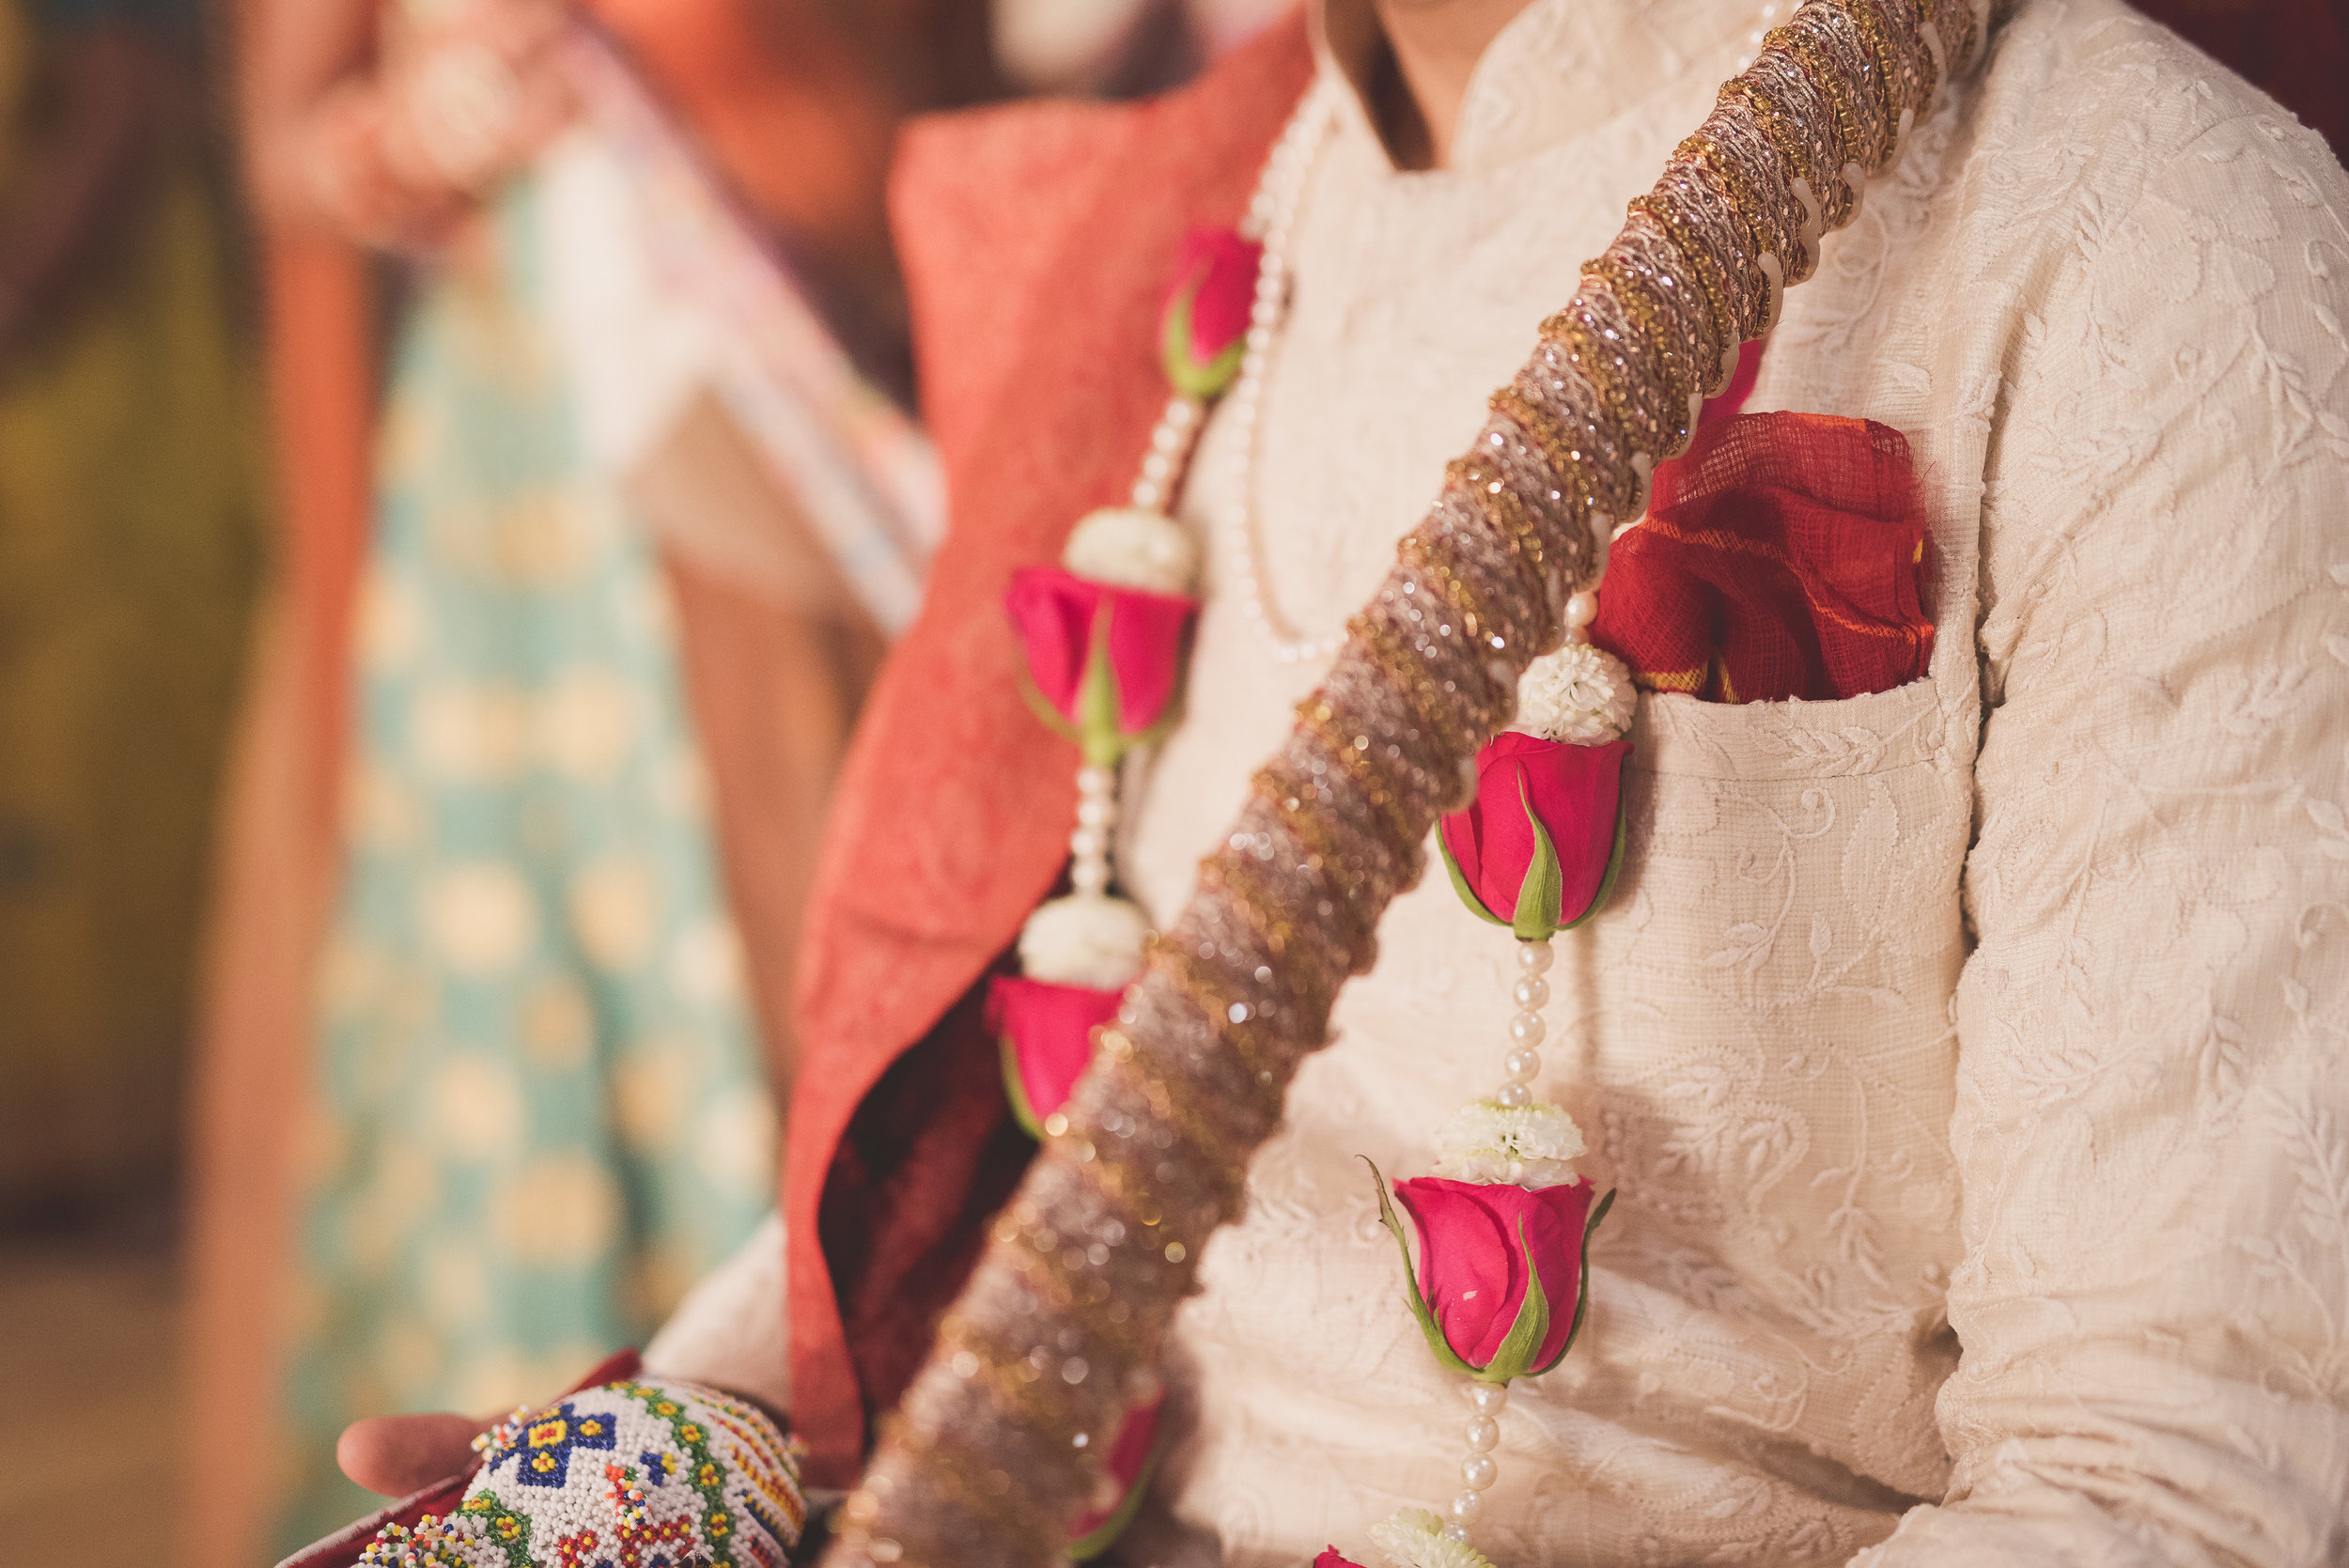  Groom's ceremony at Shree Swaminarayan Temple before wedding ceremony at Oshwal Centre. 